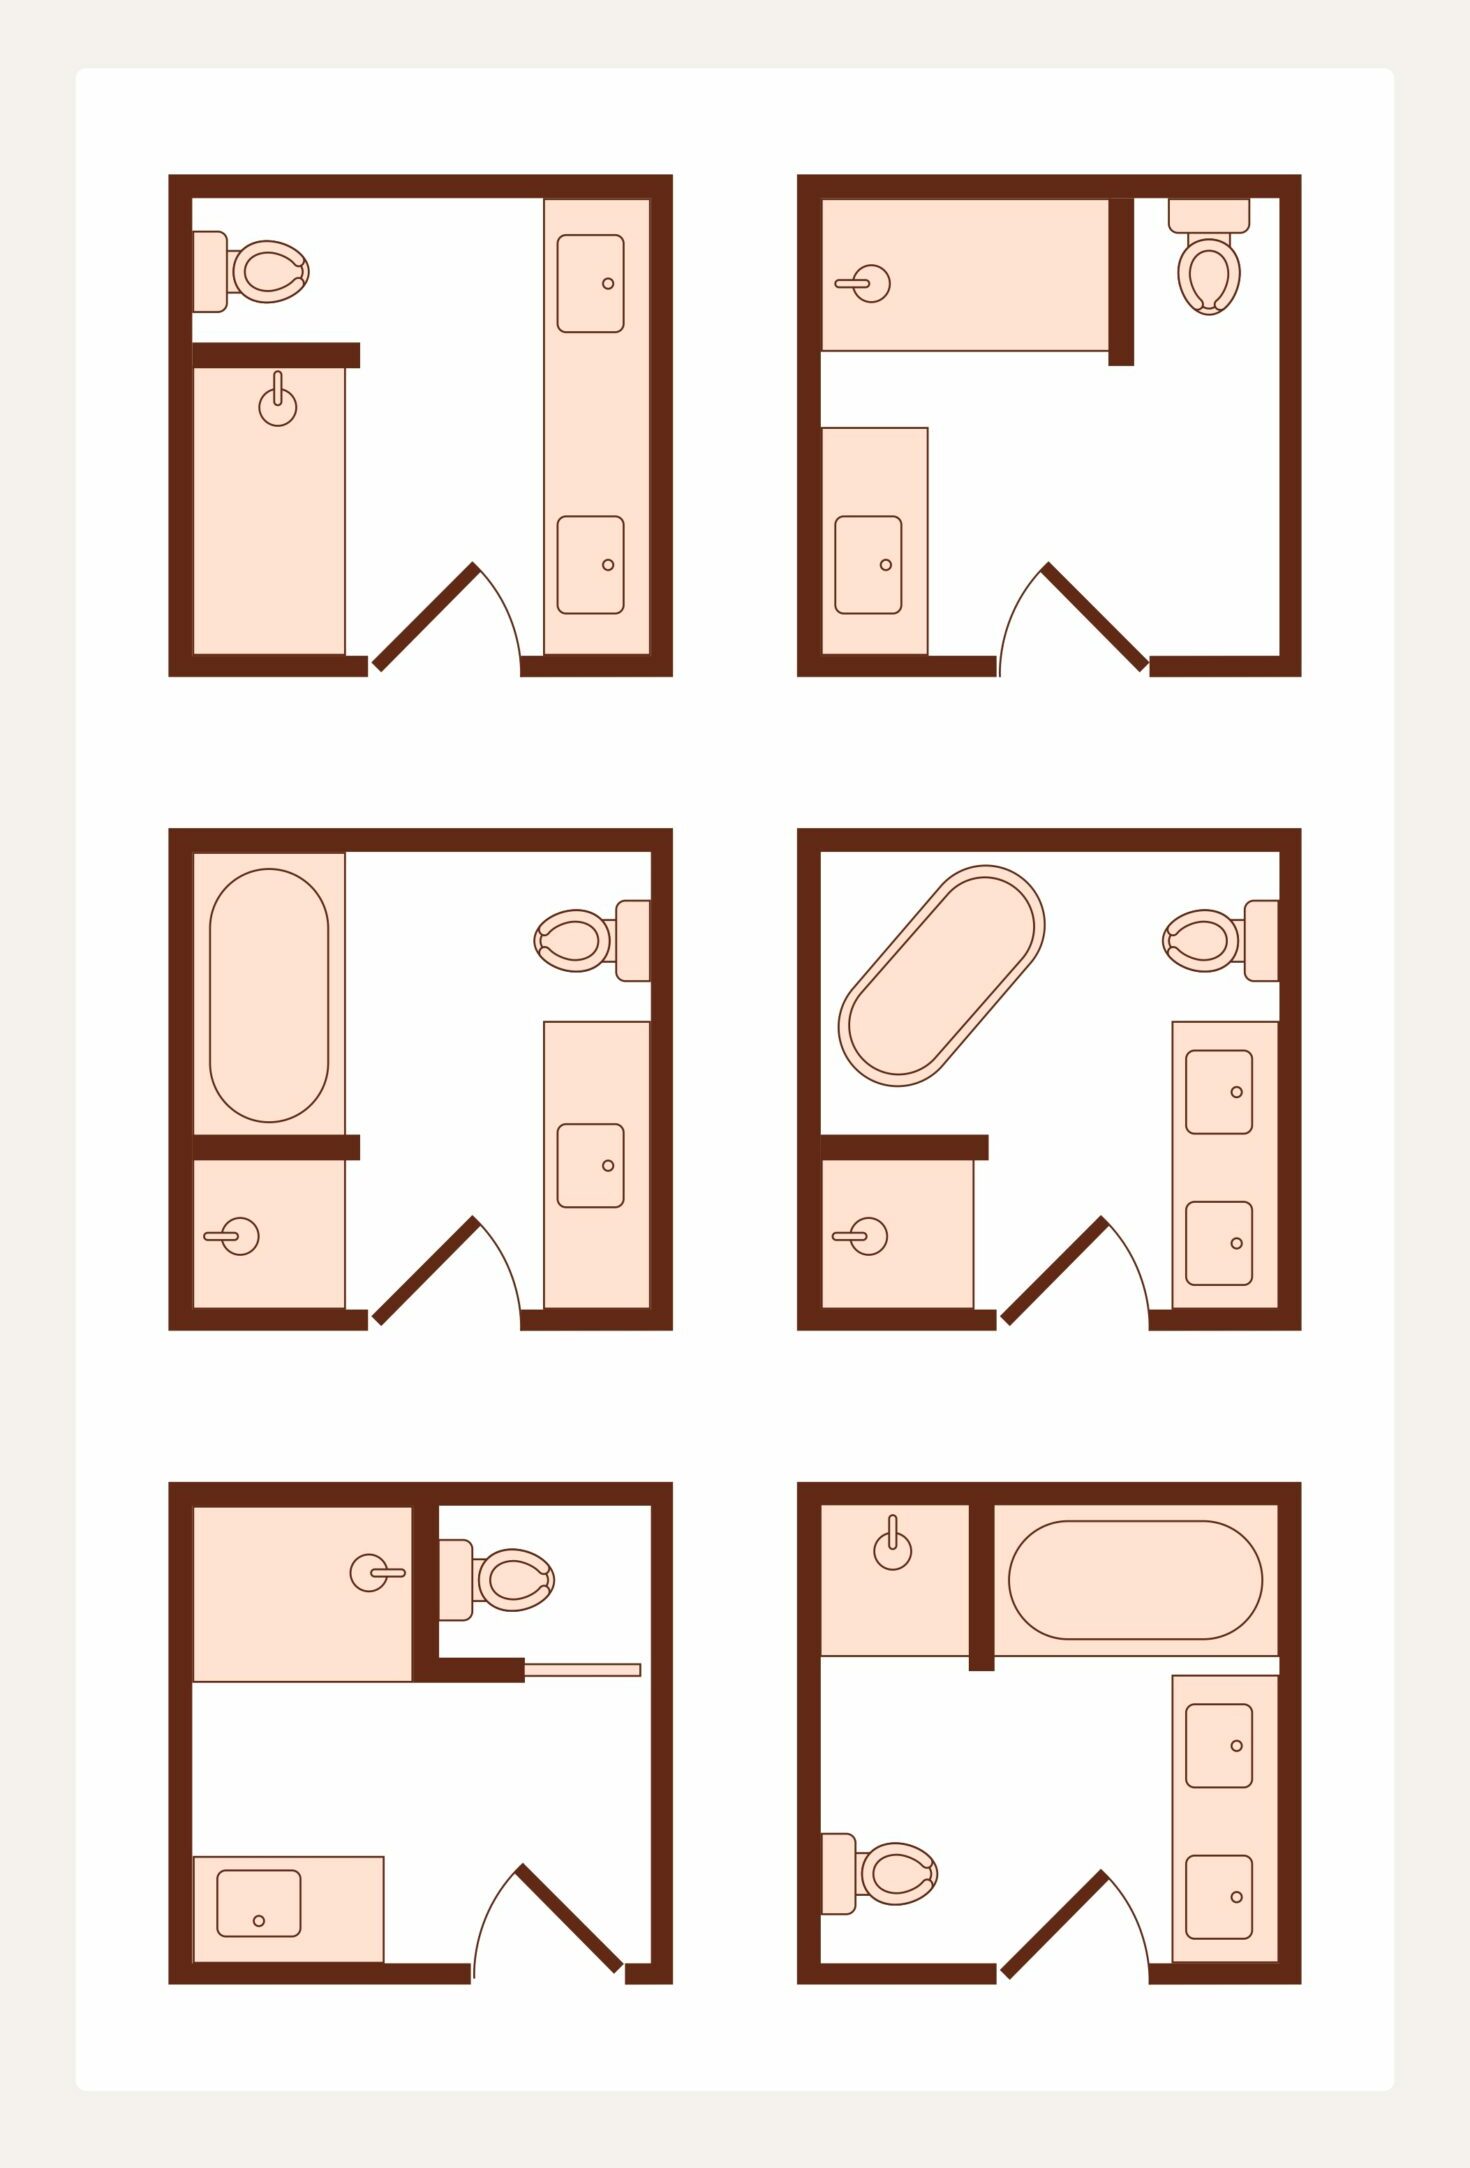 10x10 bathroom layout ideas